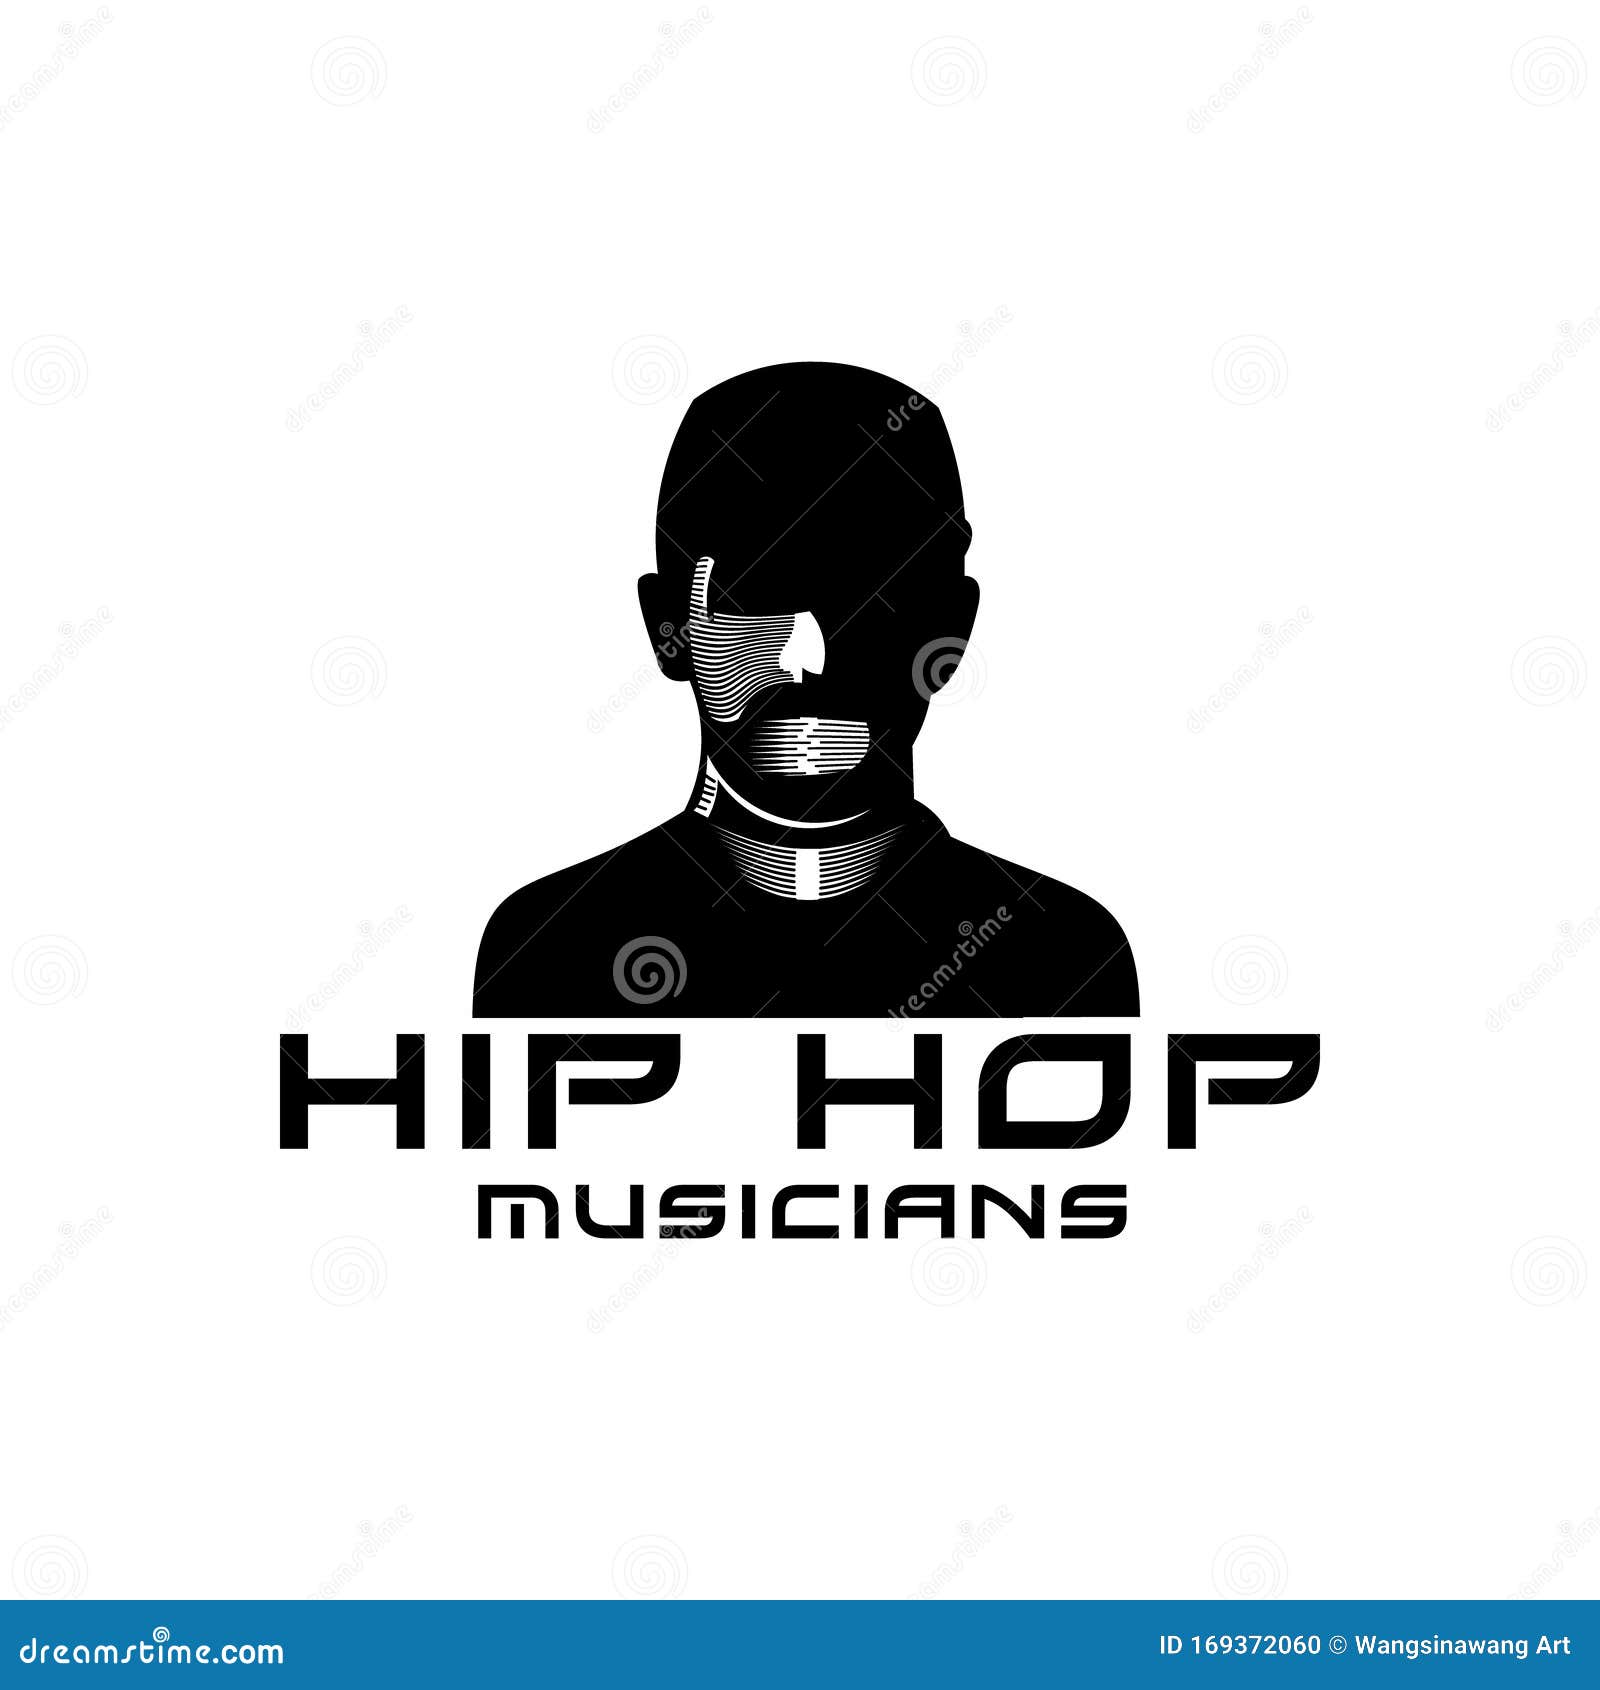 Silhouette Man Using Cap Hip Hop Musician Logo Ideas Inspiration